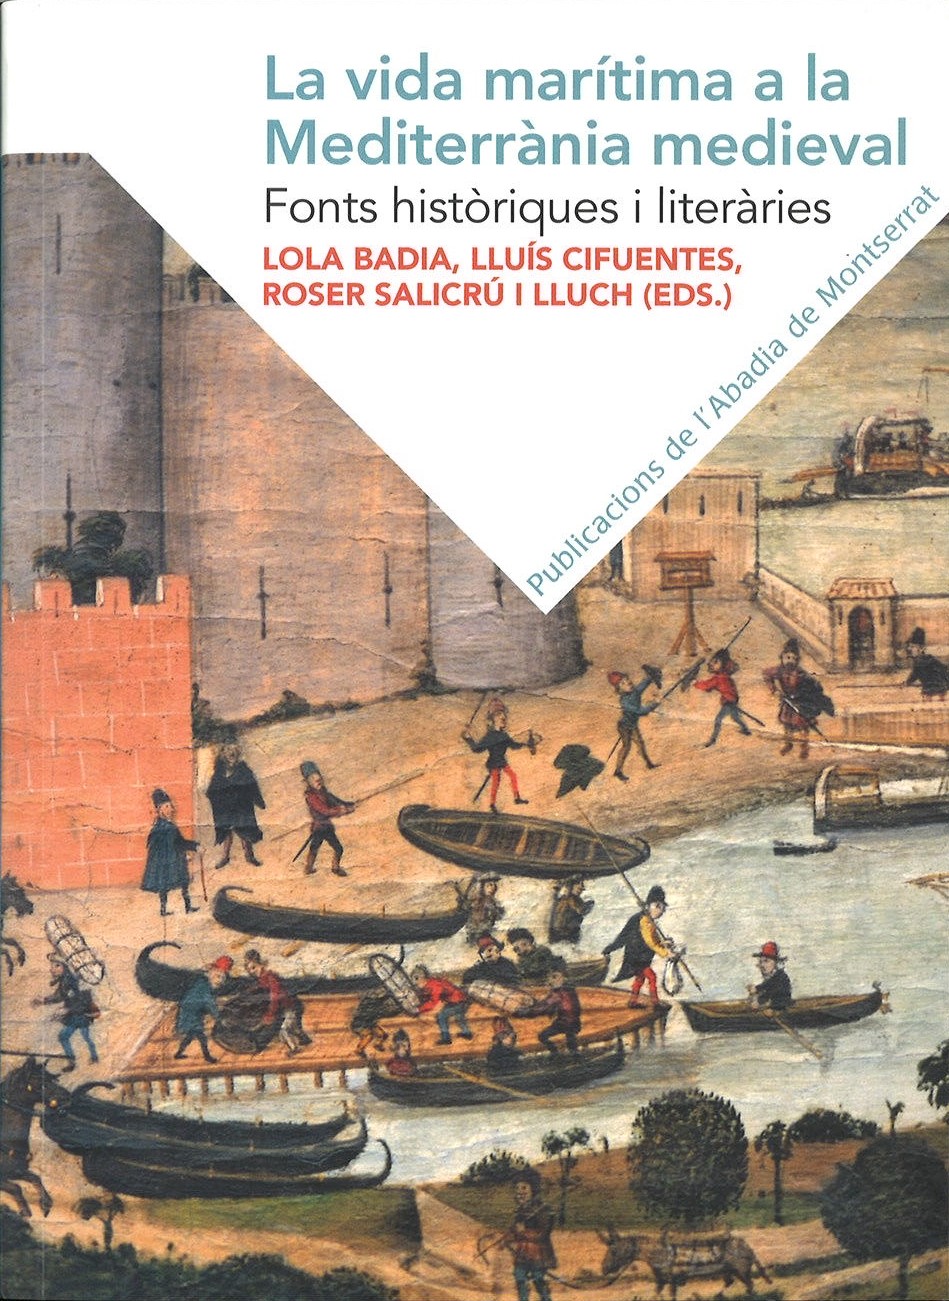 Imagen de portada del libro La vida marítima a la Mediterrània medieval